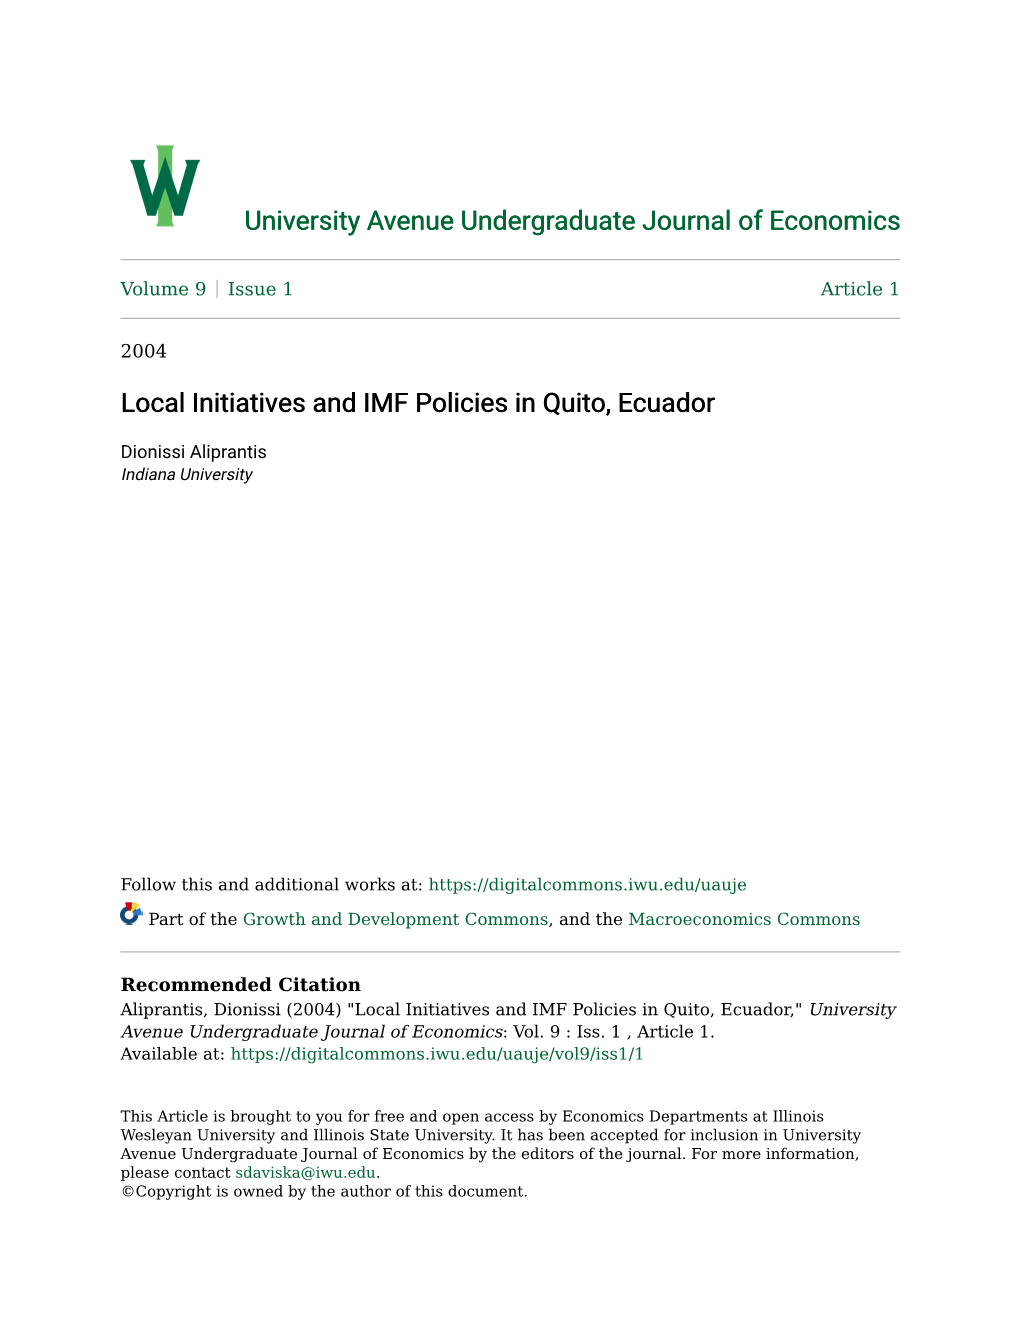 Local Initiatives and IMF Policies in Quito, Ecuador